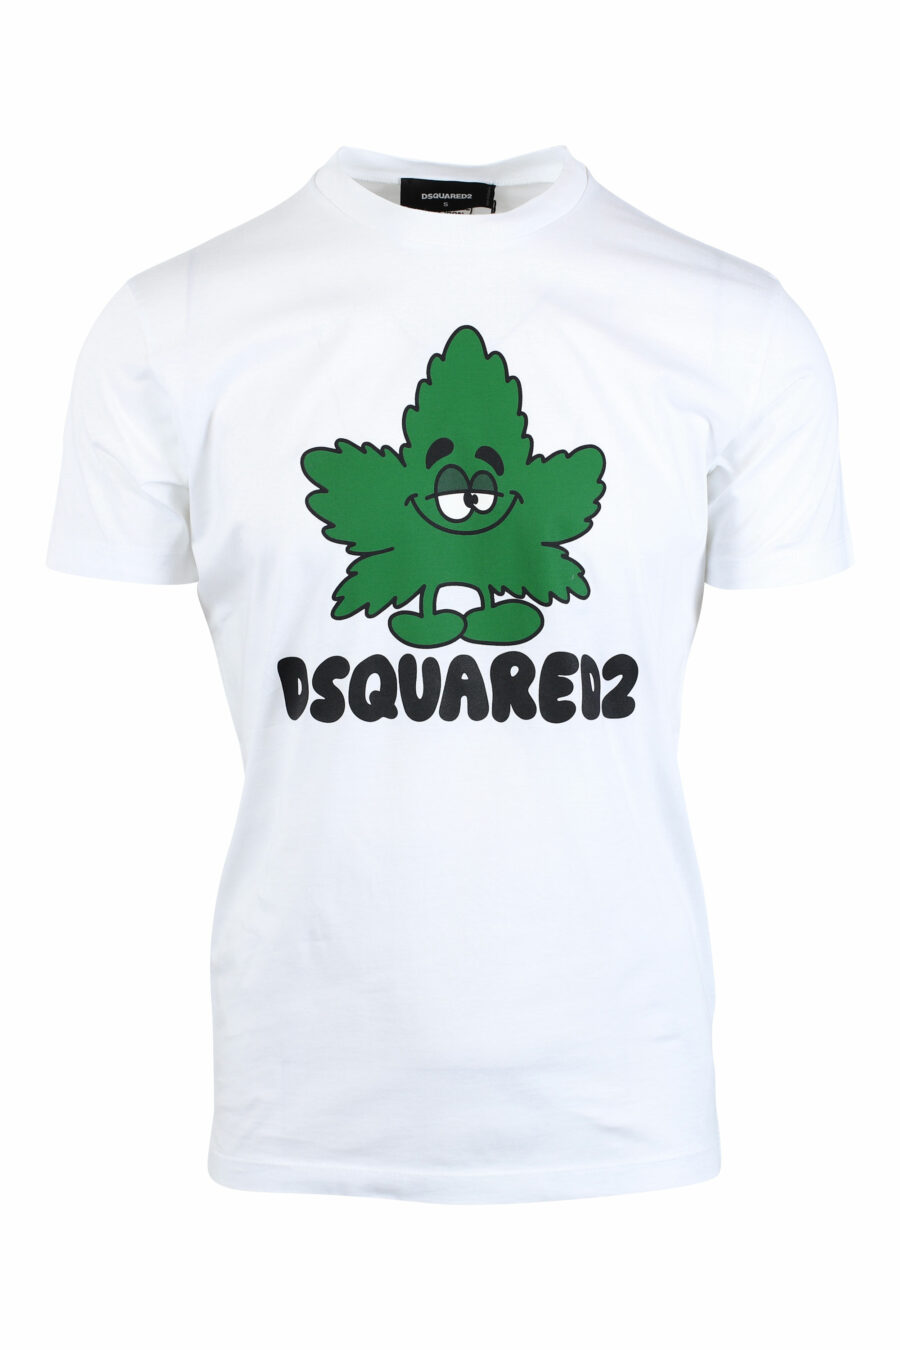 T-shirt blanc avec logo de feuilles vertes joyeuses - IMG 2632